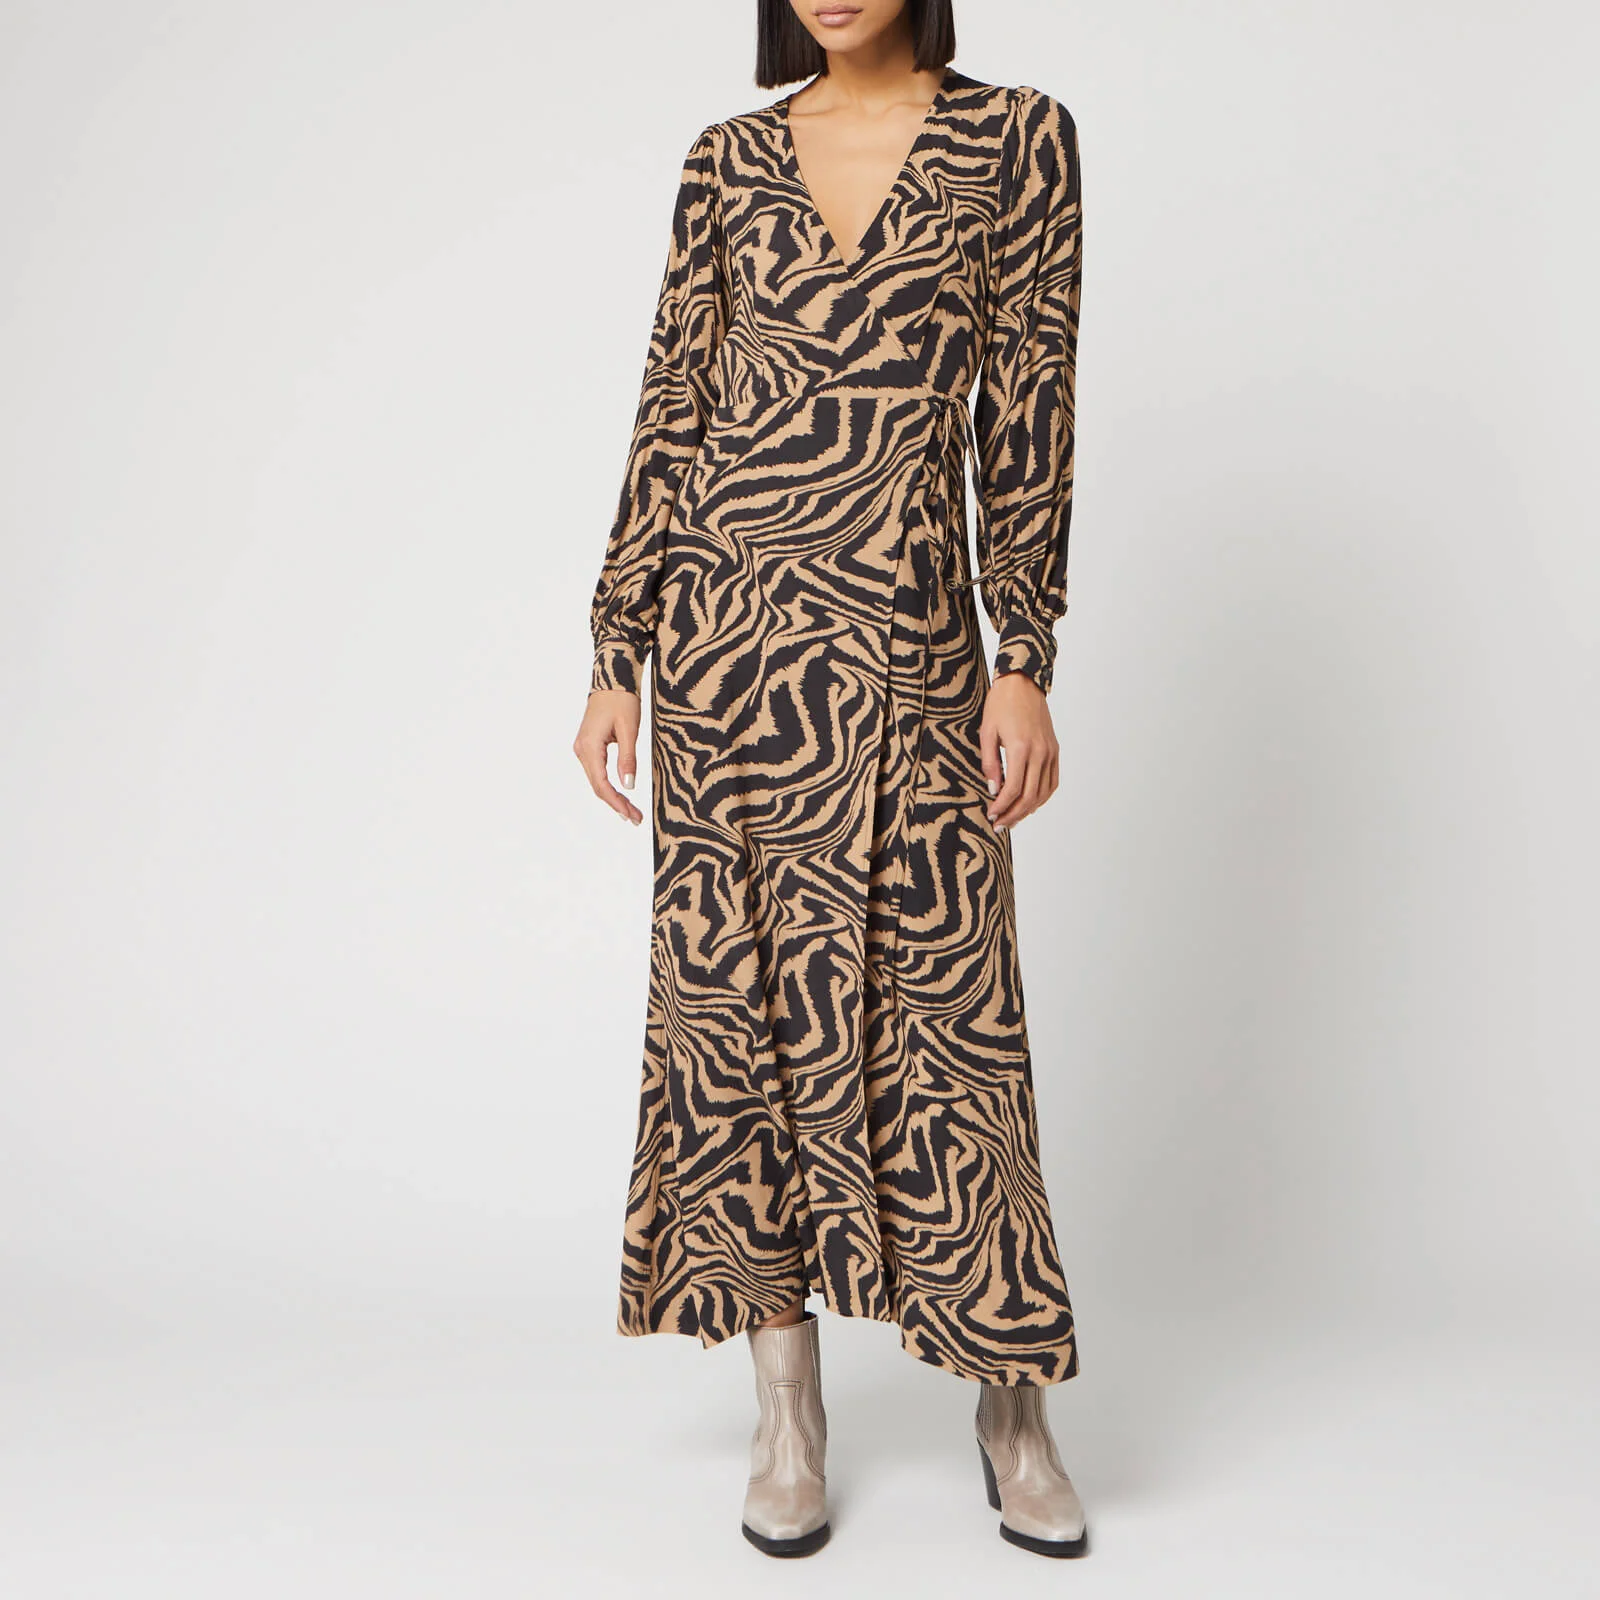 Ganni Women's Printed Crepe Zebra Wrap Dress - Tannin Image 1